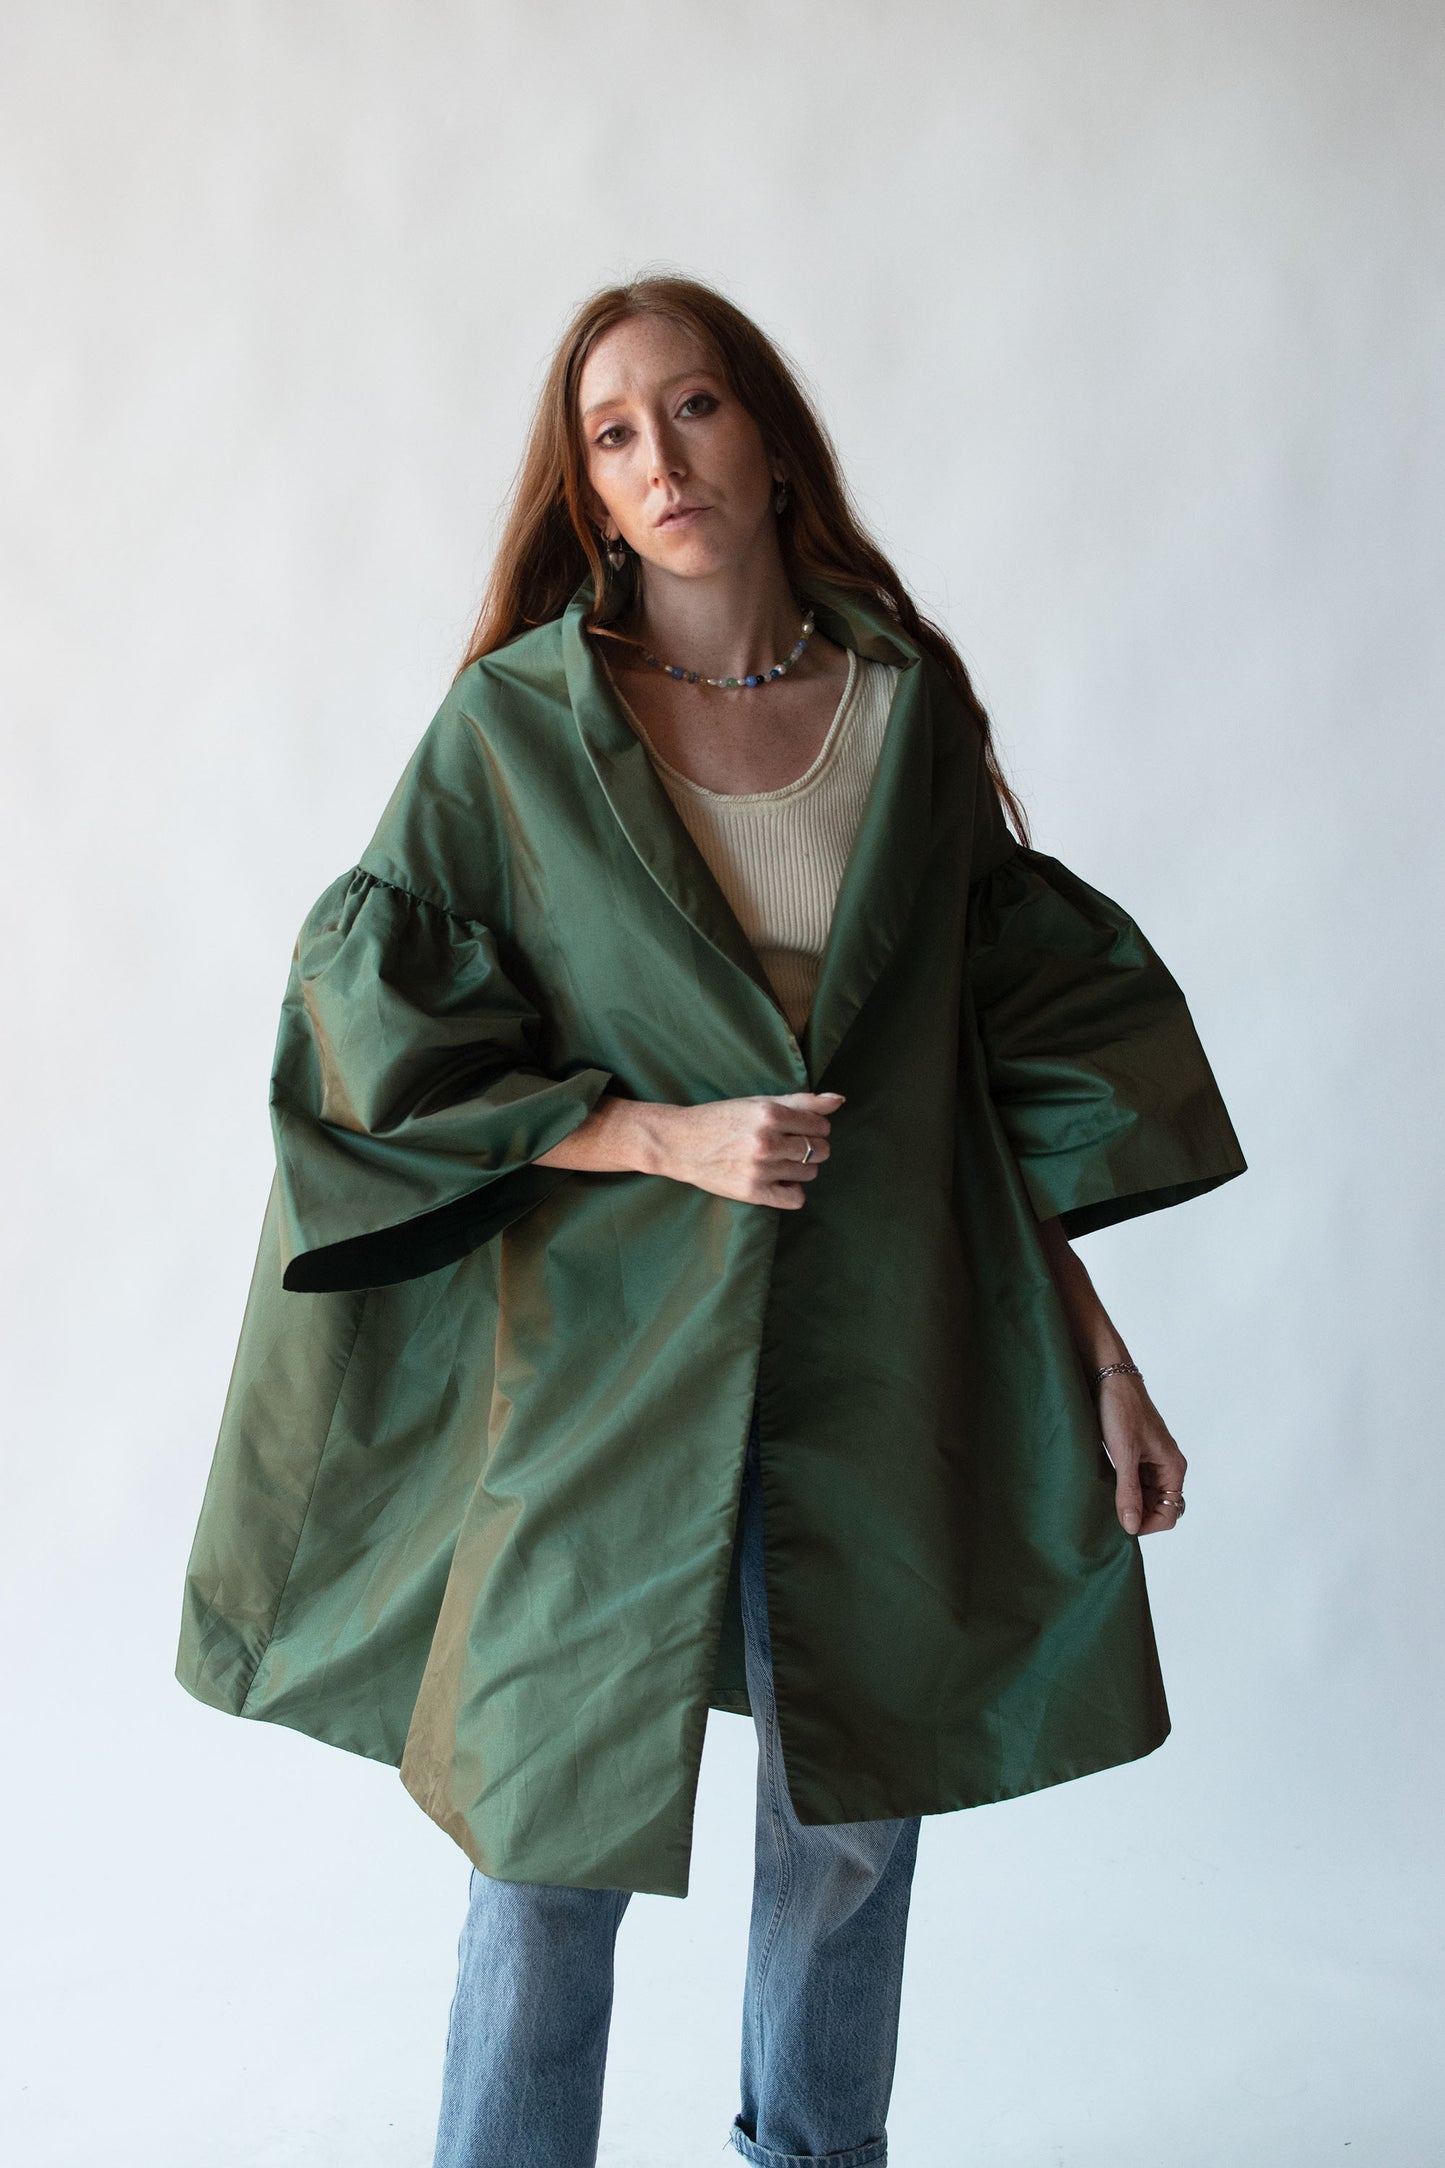 Iridescent Green Evening Coat | Victor Costa